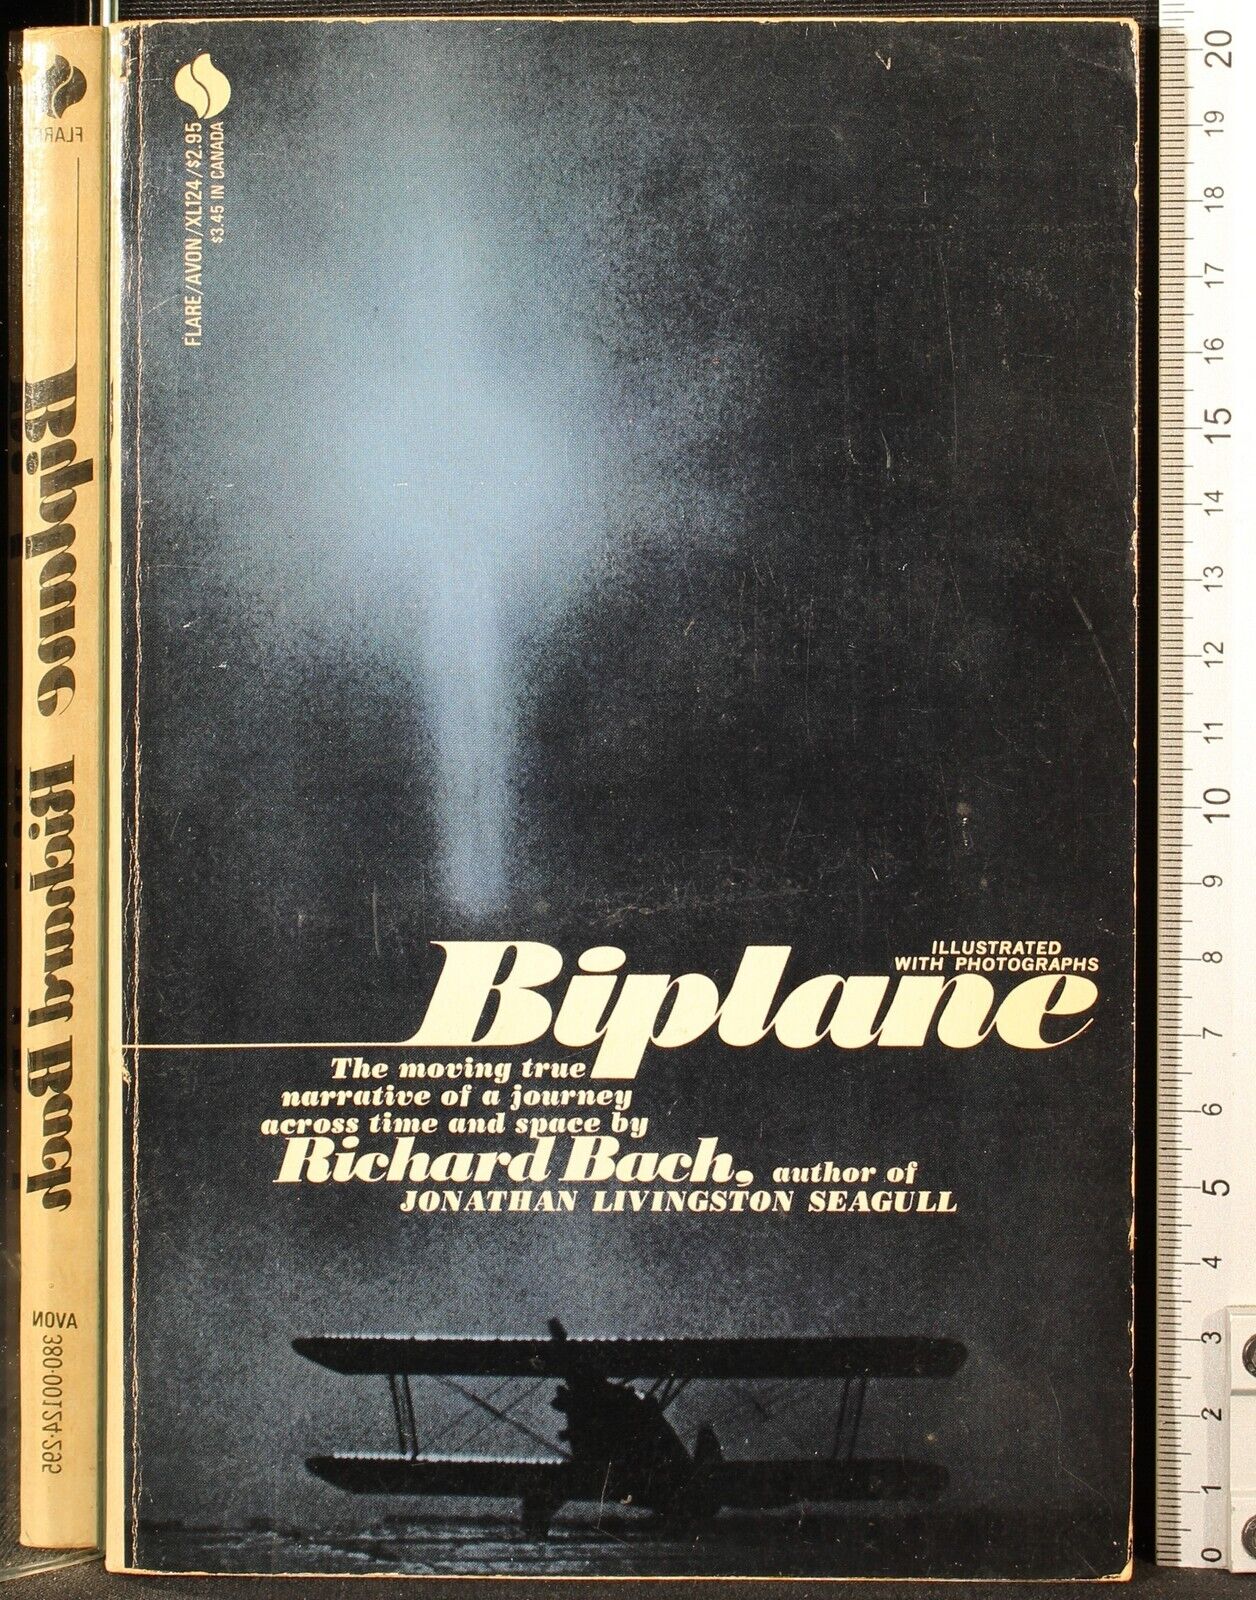 Biplane